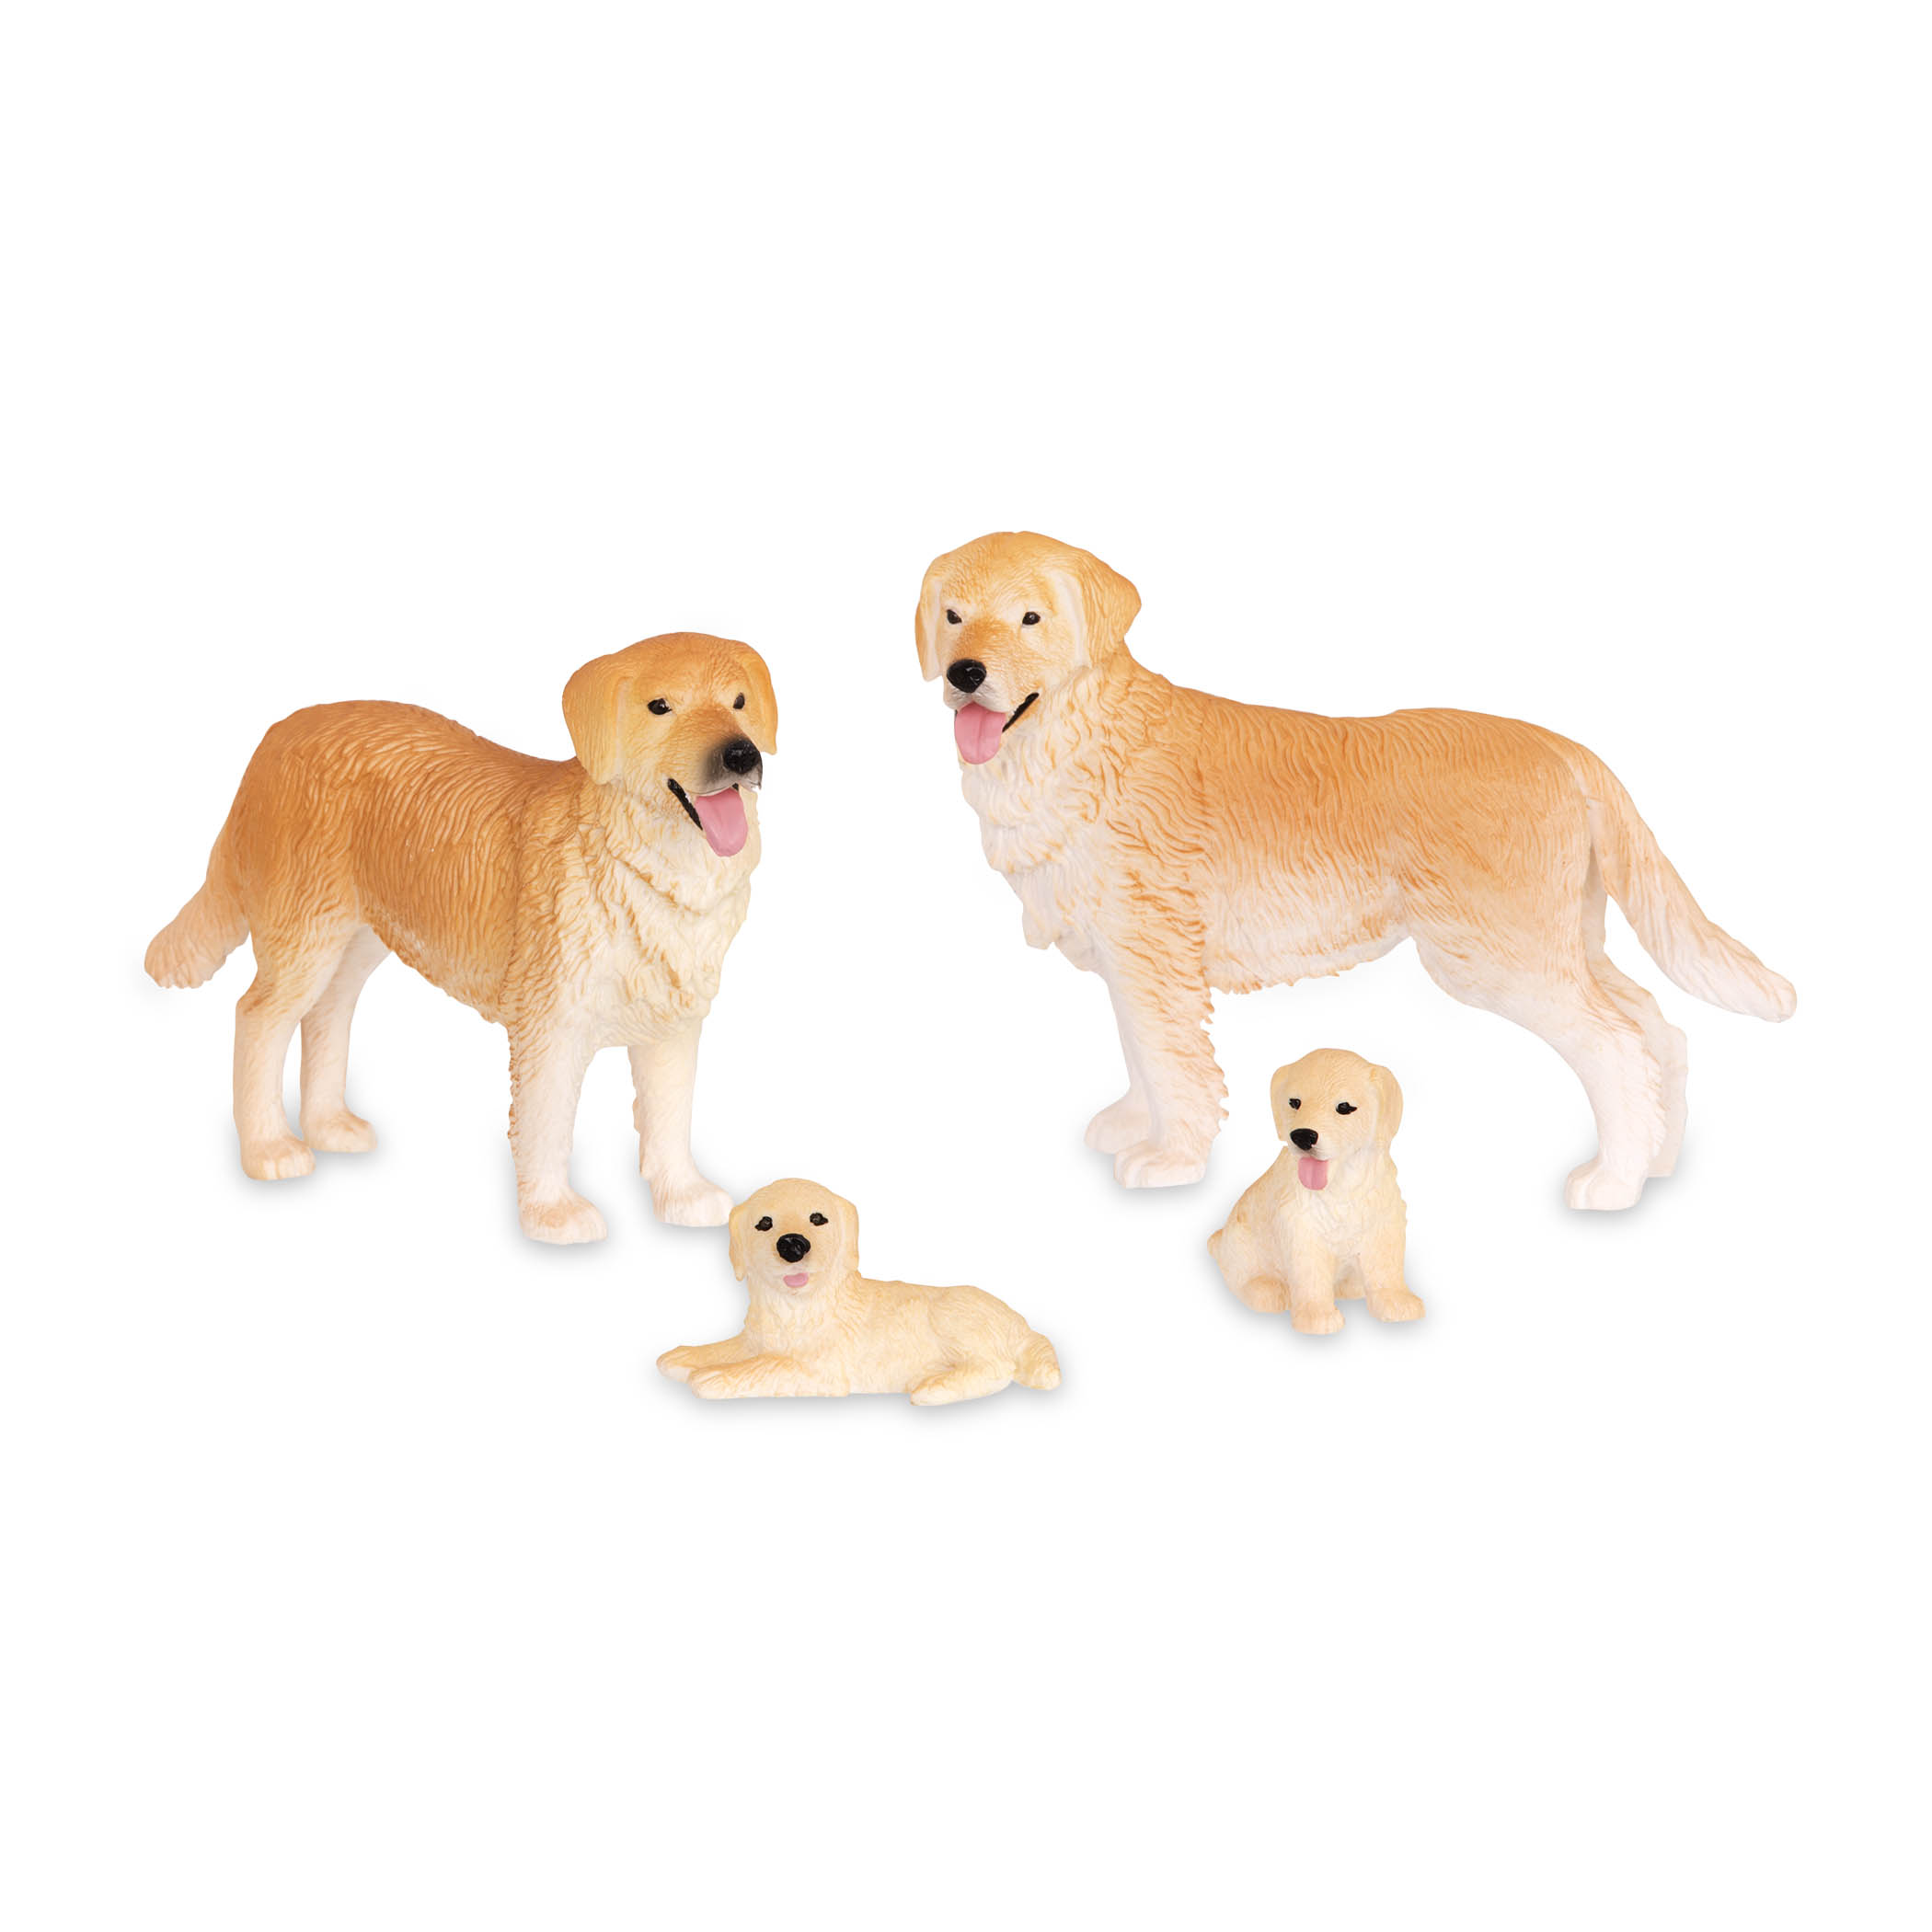 Realistic Large Dog Figures Playset Golden Retriever Figurines